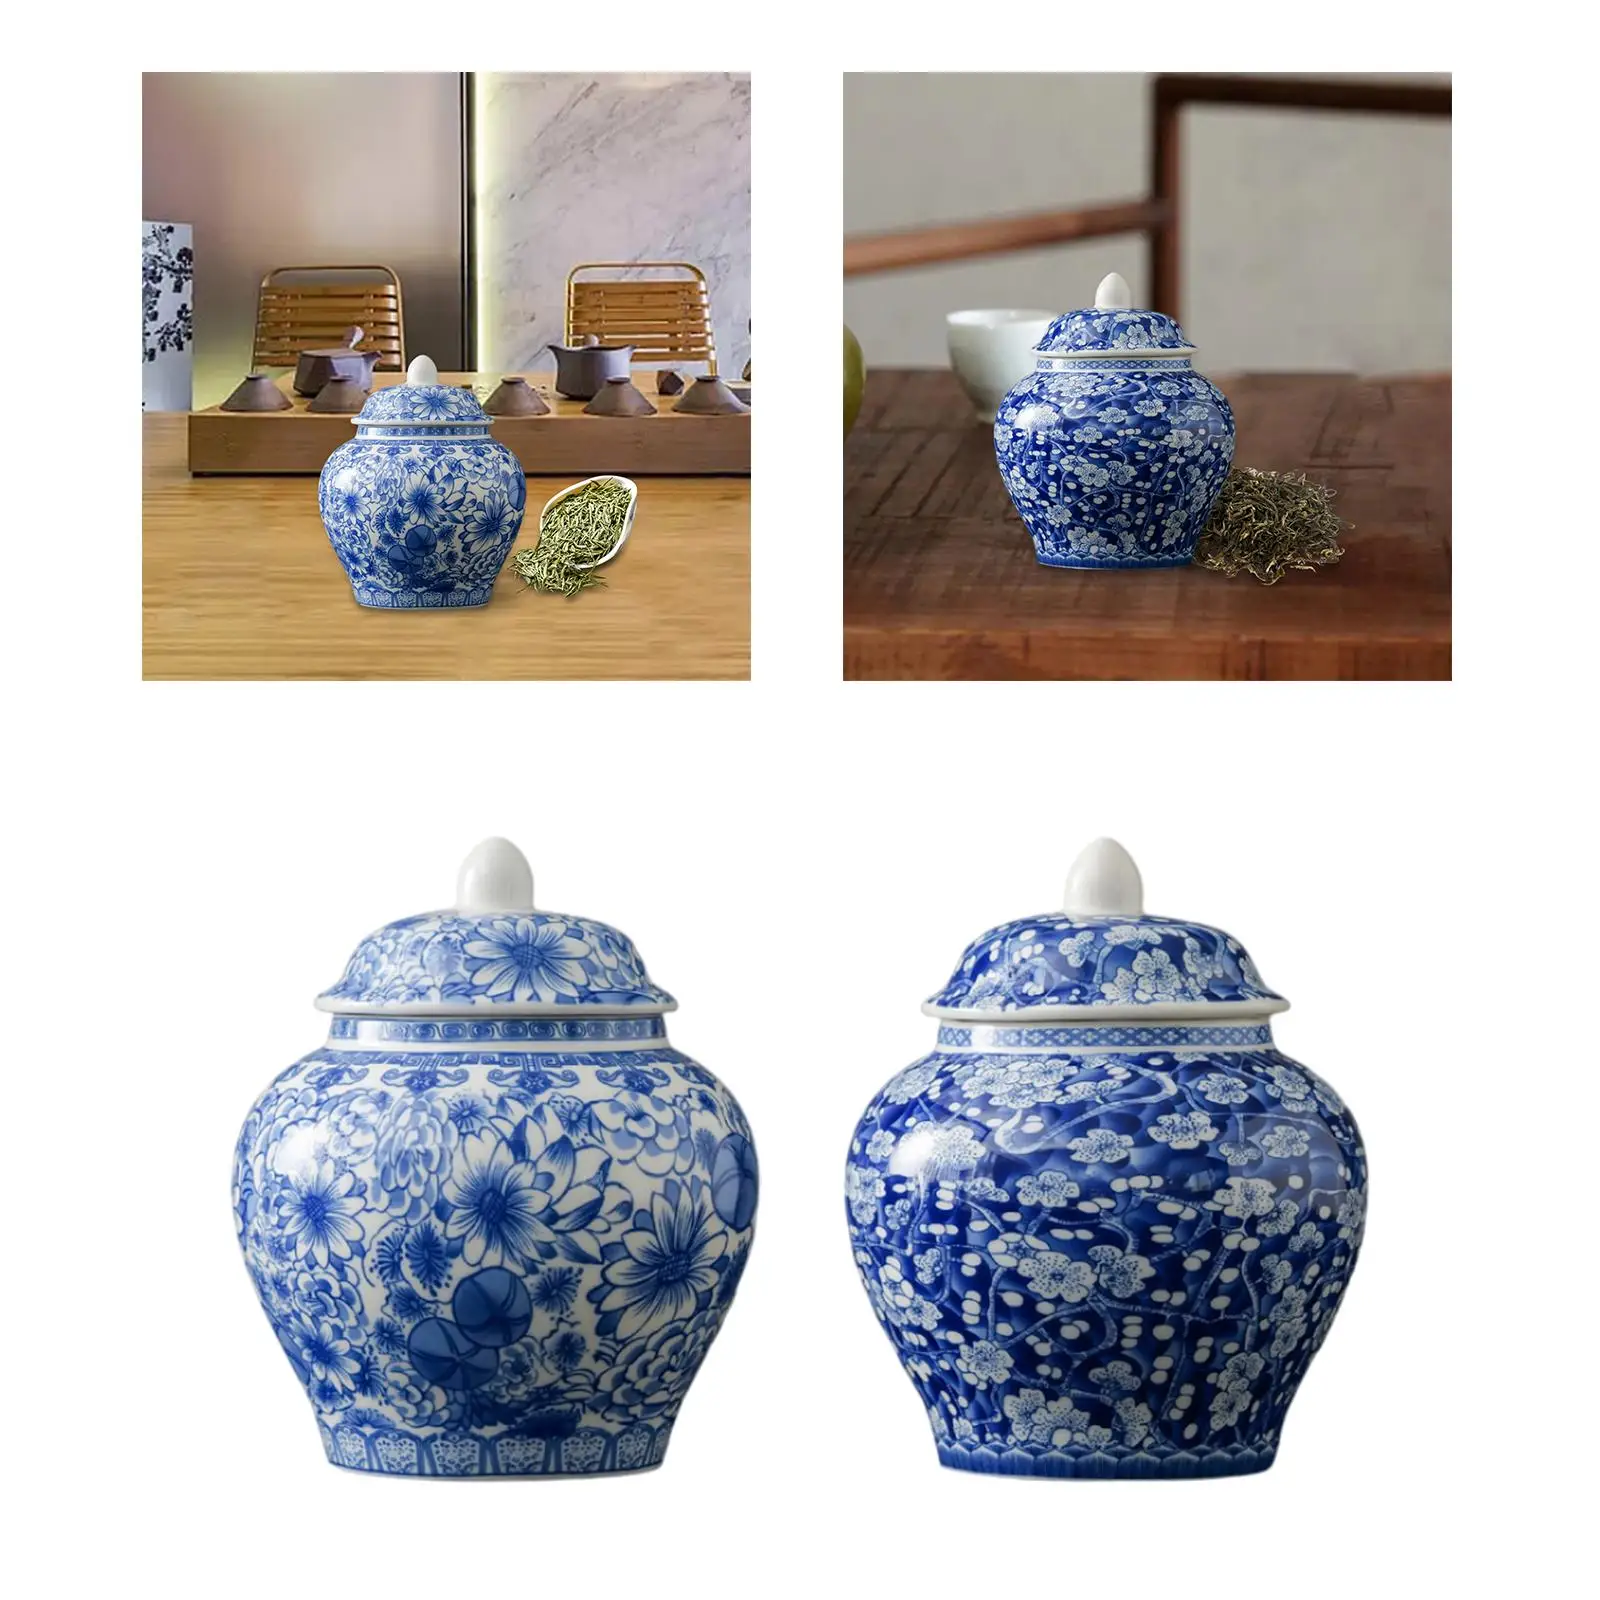 Tea Canister Floral Handicraft Table Centerpieces Oriental Style Home Decoration Blue White Porcelain Ginger Jar Decorative Vase